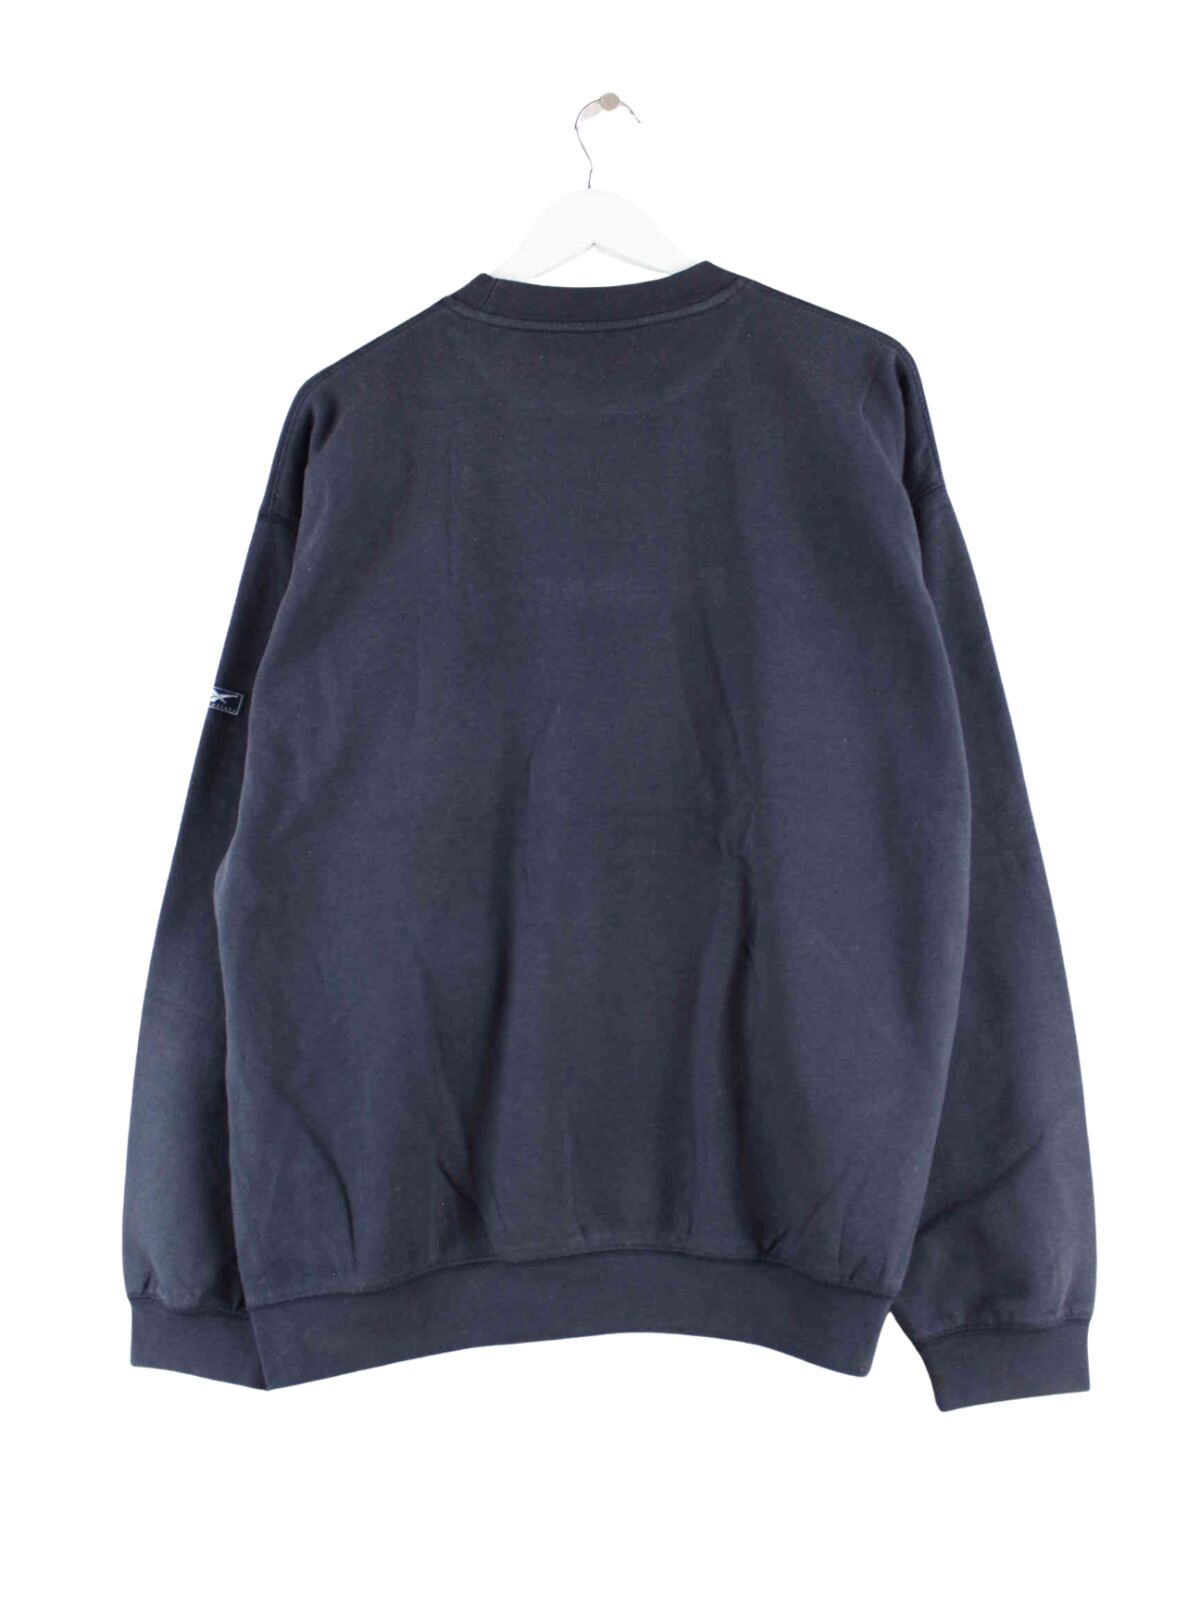 Reebok Embroidered Sweater Blau XL (back image)